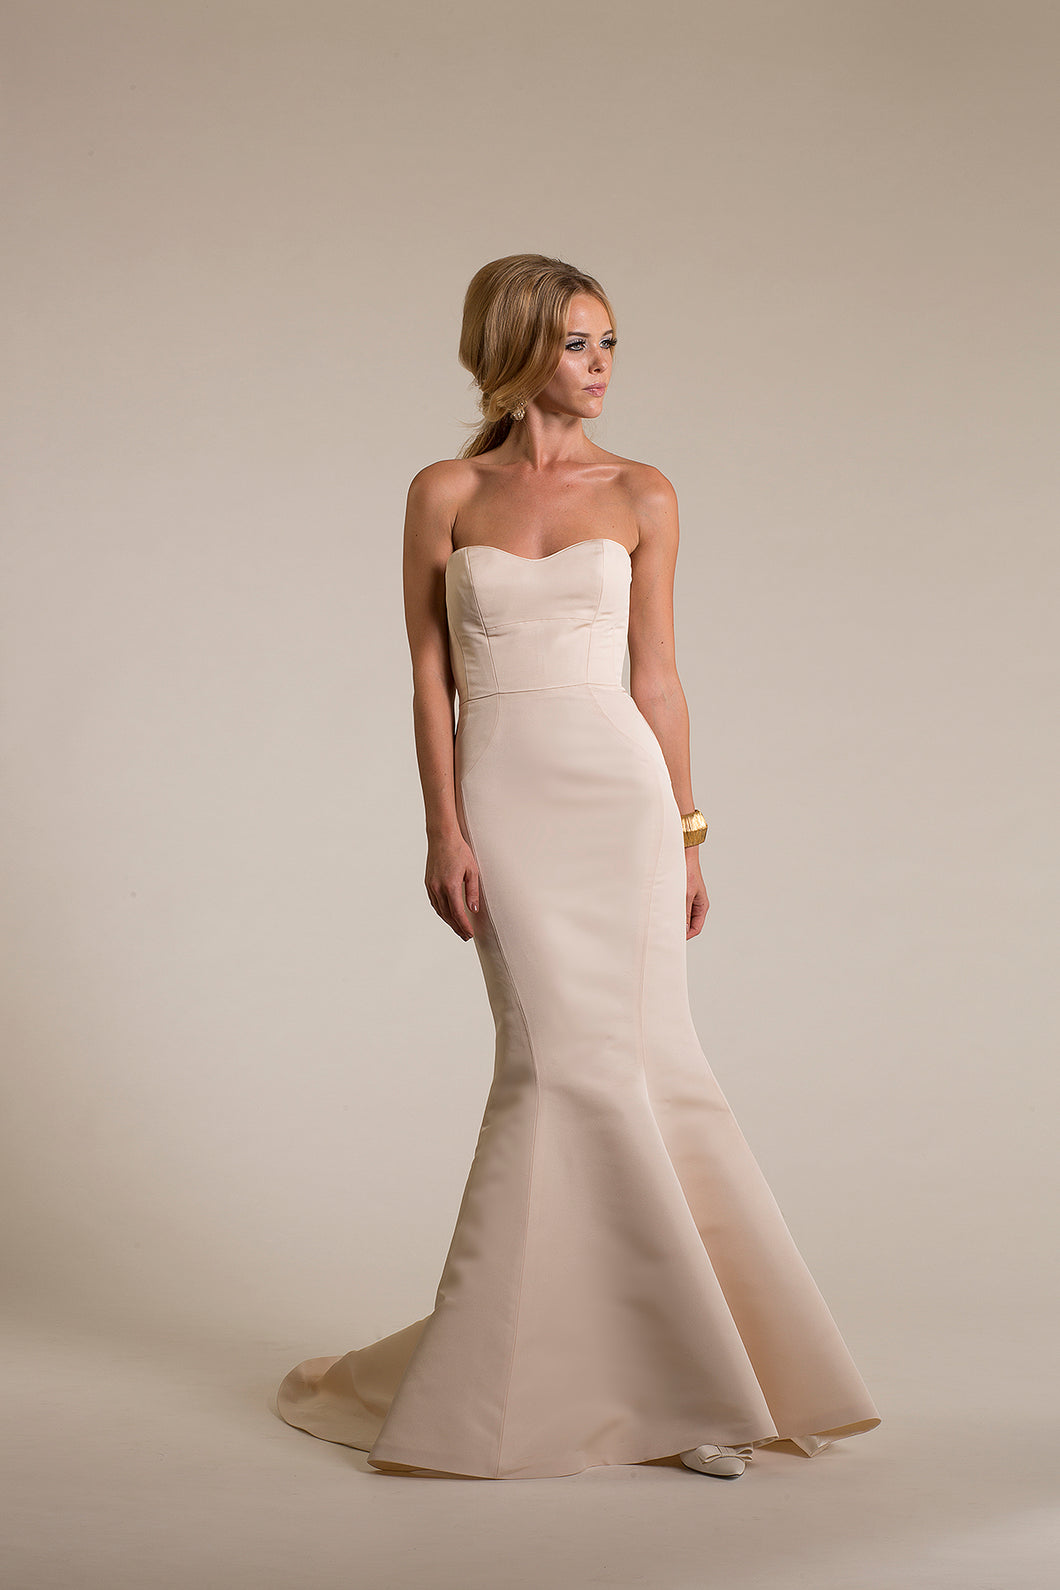 Amy Kuschel 'Lennon' size 6 used wedding dress front view on model